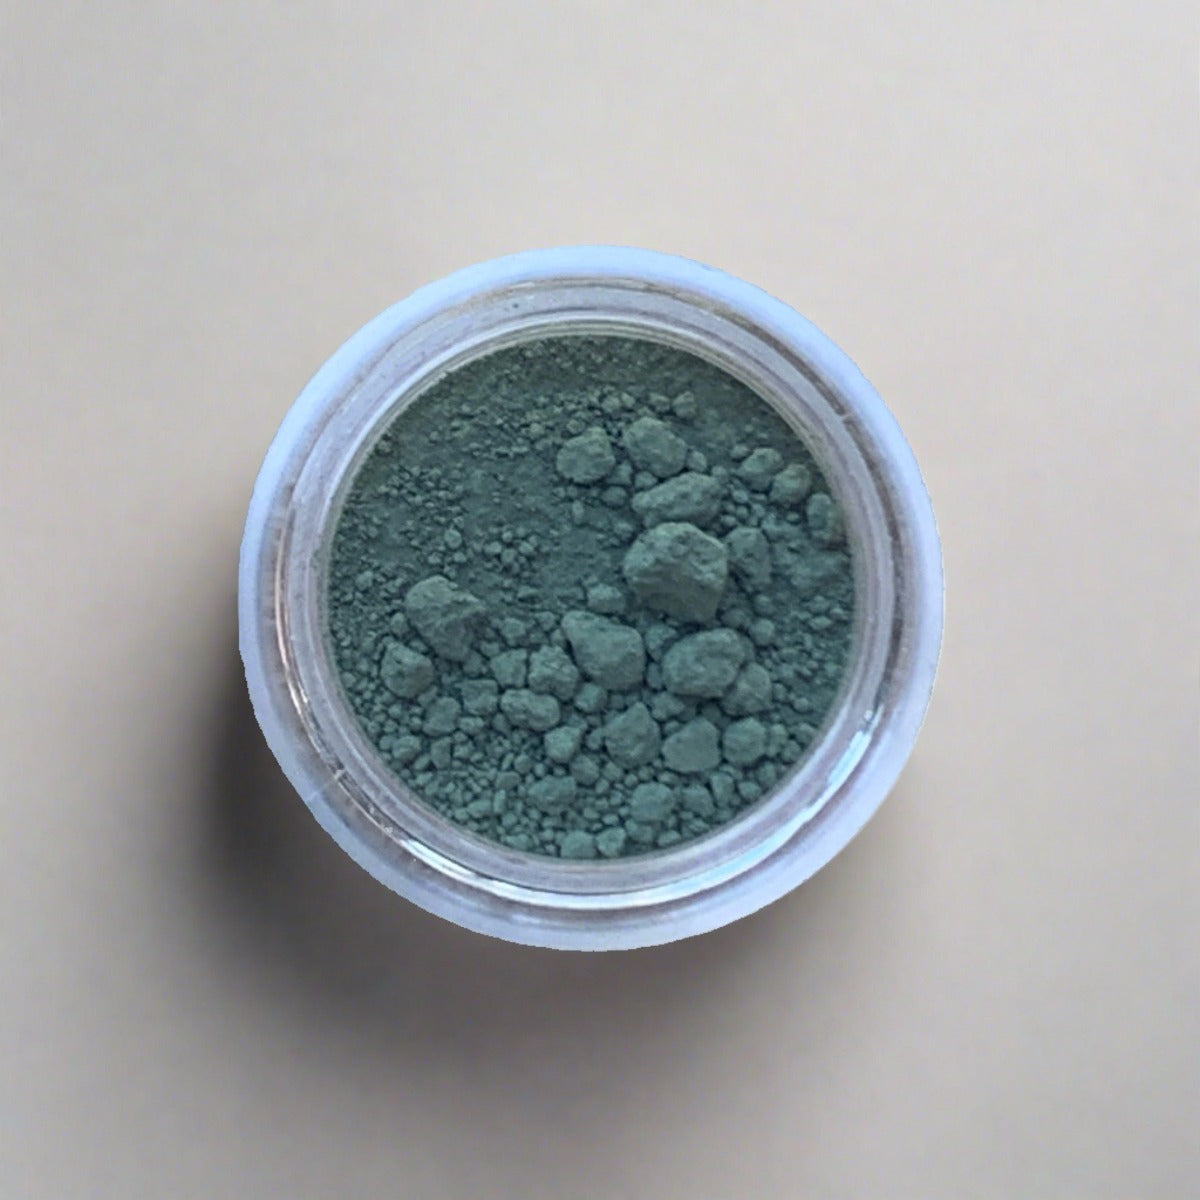 Jar of Acqua Eyeshadow: a refreshing cool green loose powder eyeshadow shade